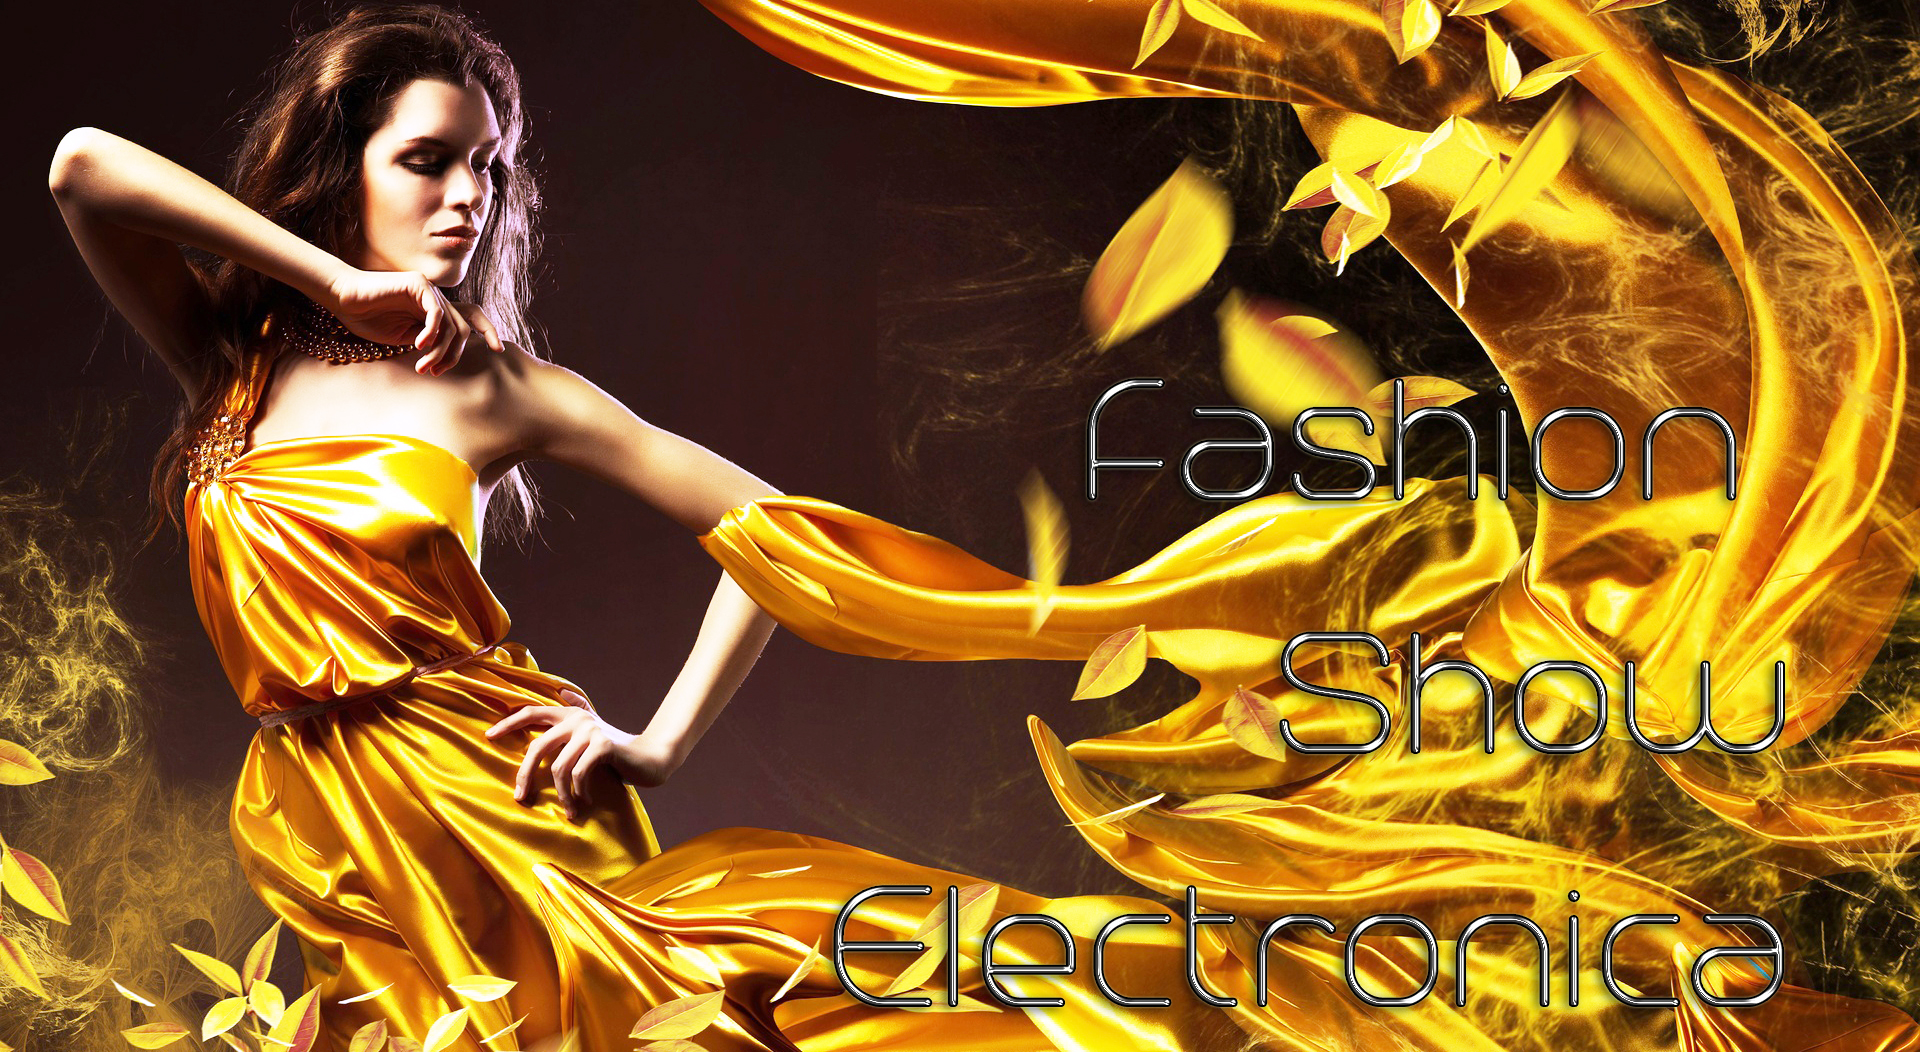 Fashion Show Electronica